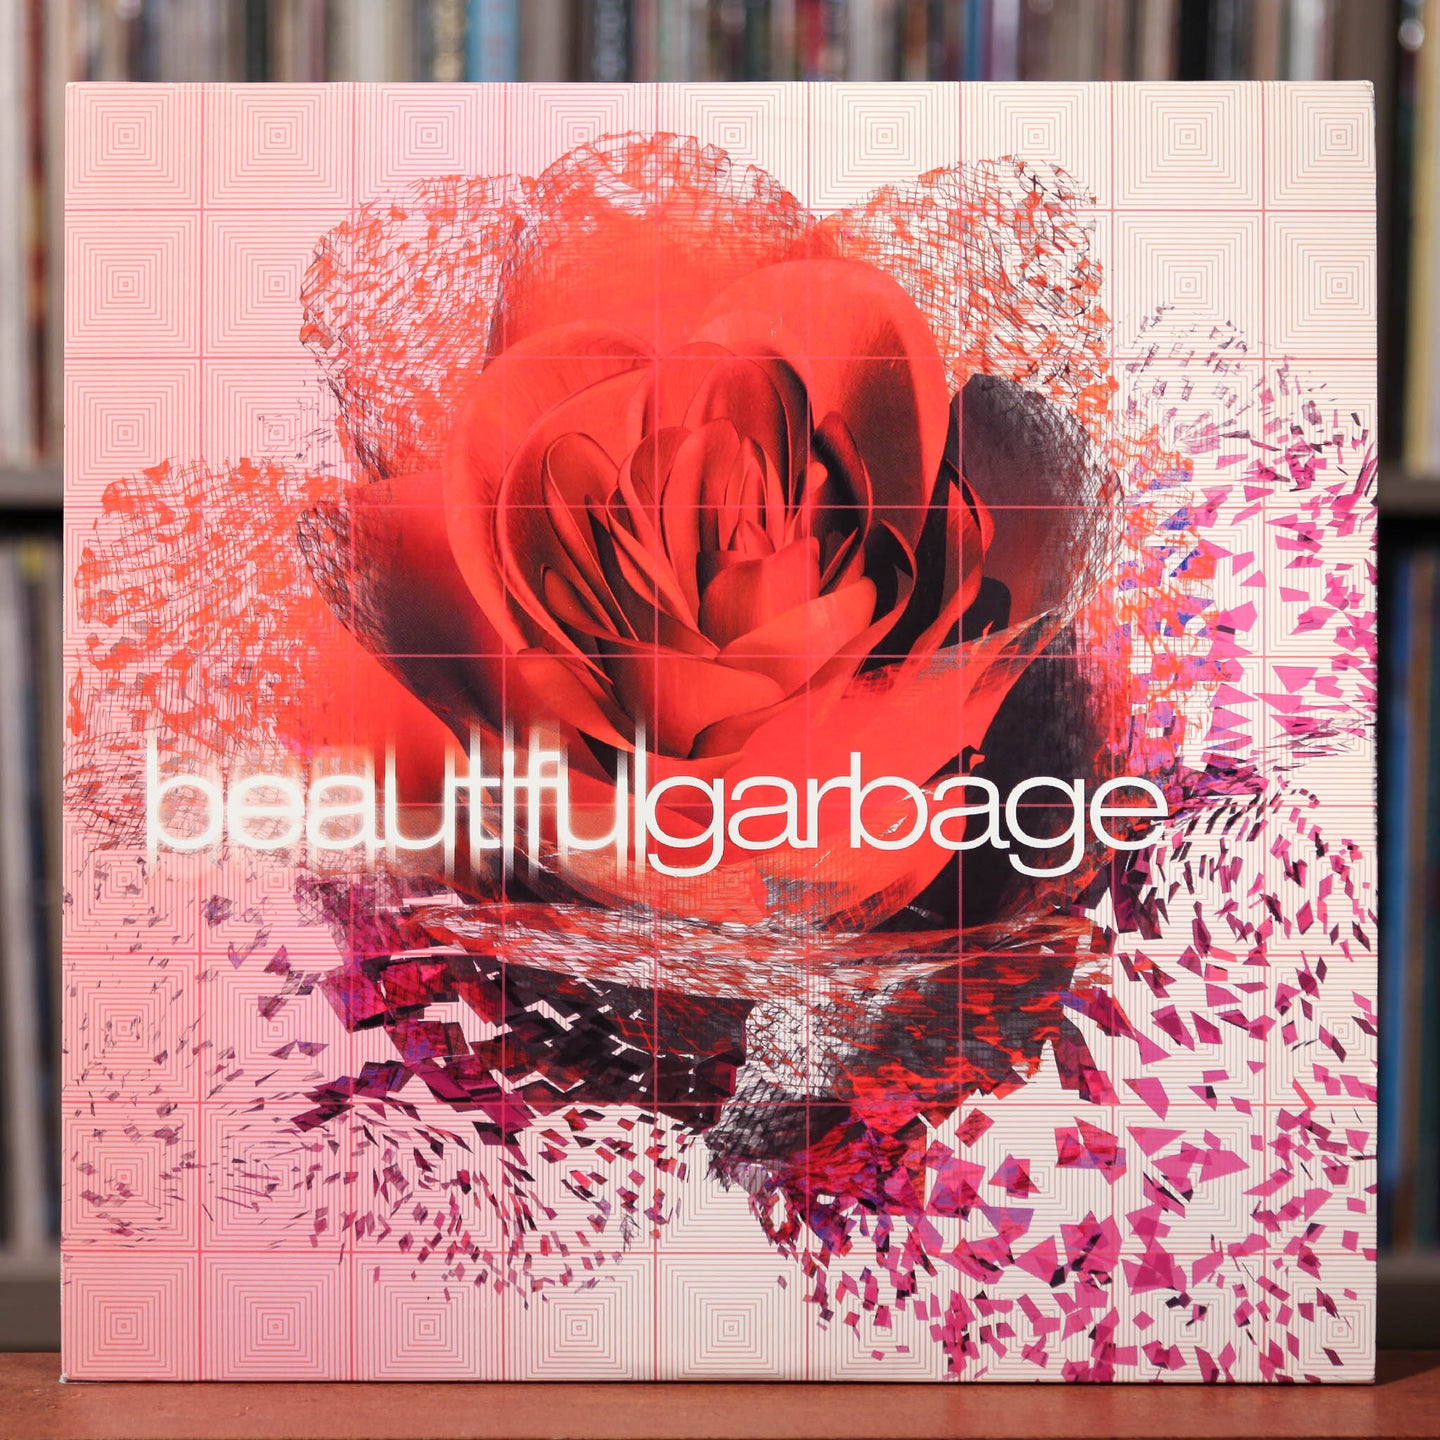 Garbage - Beautifulgarbage - 2001 Interscope, EX/NM